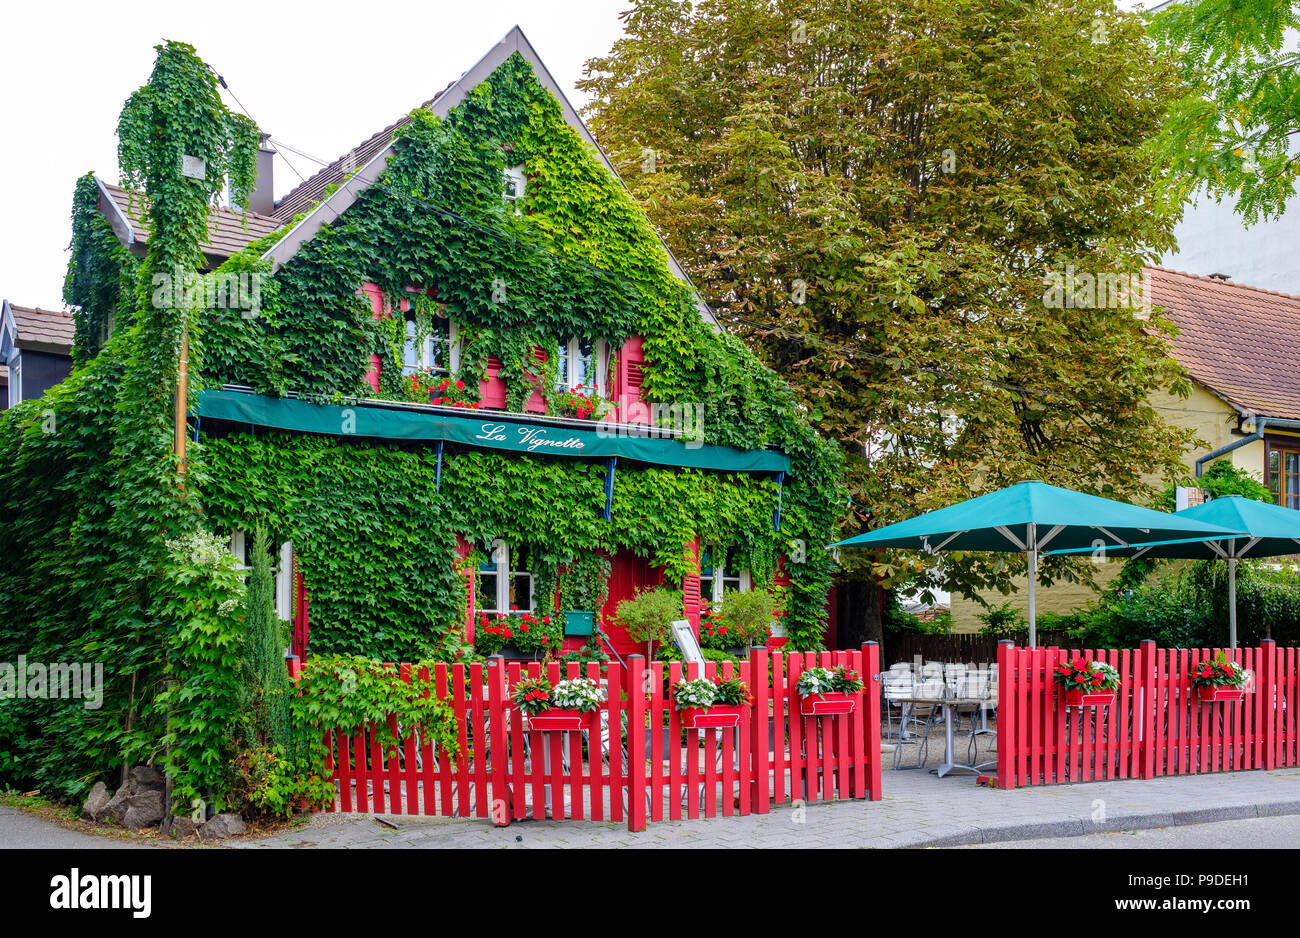 Strasbourg, Restaurant La Vignette, ivy-covered house, red pickets fence, Alsace, France, Europe, Stock Photo